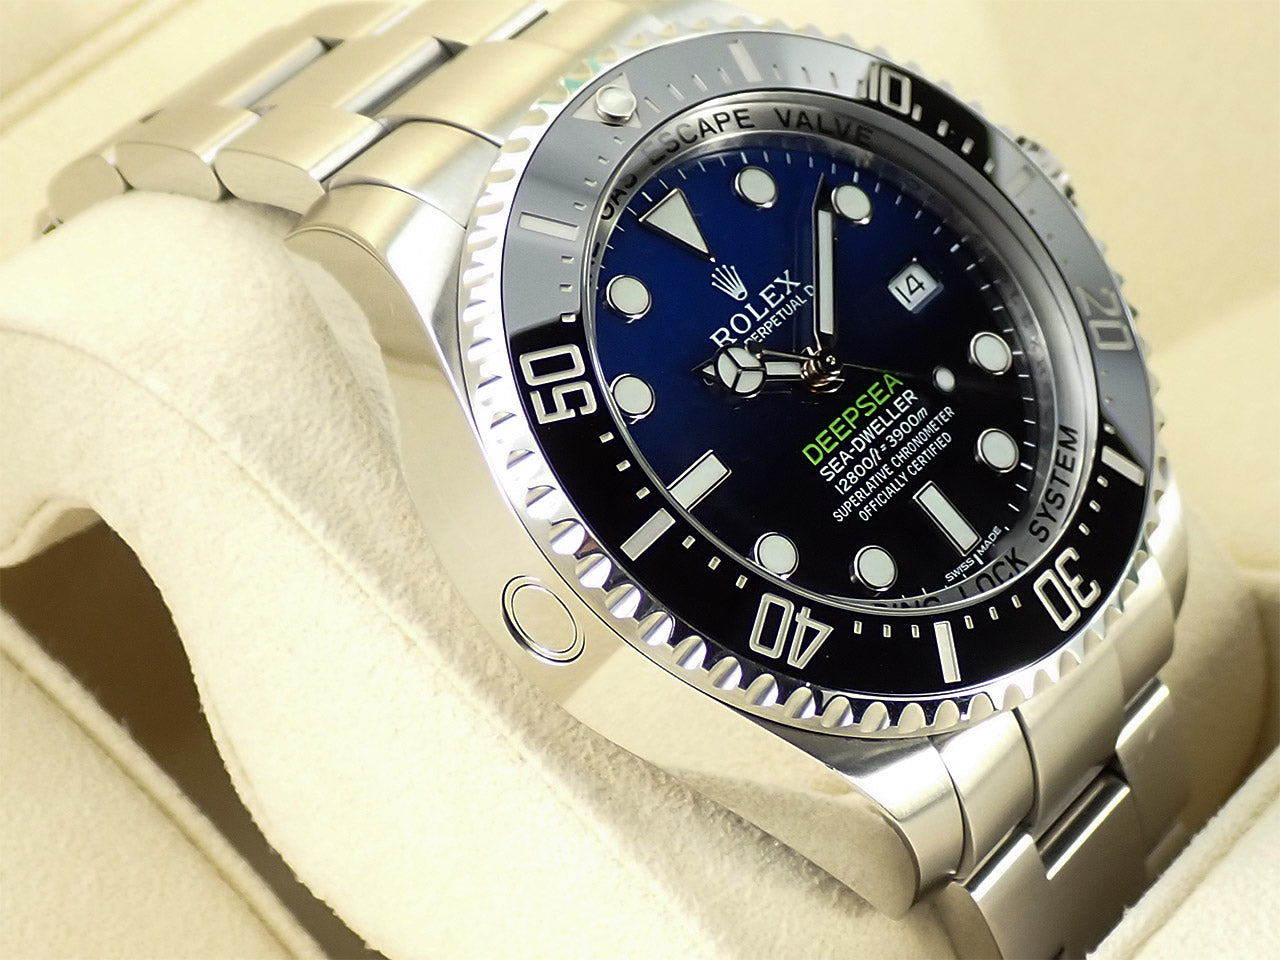 Rolex Sea-Dweller Deep Sea D Blue &lt;Warranty, Box, etc.&gt;